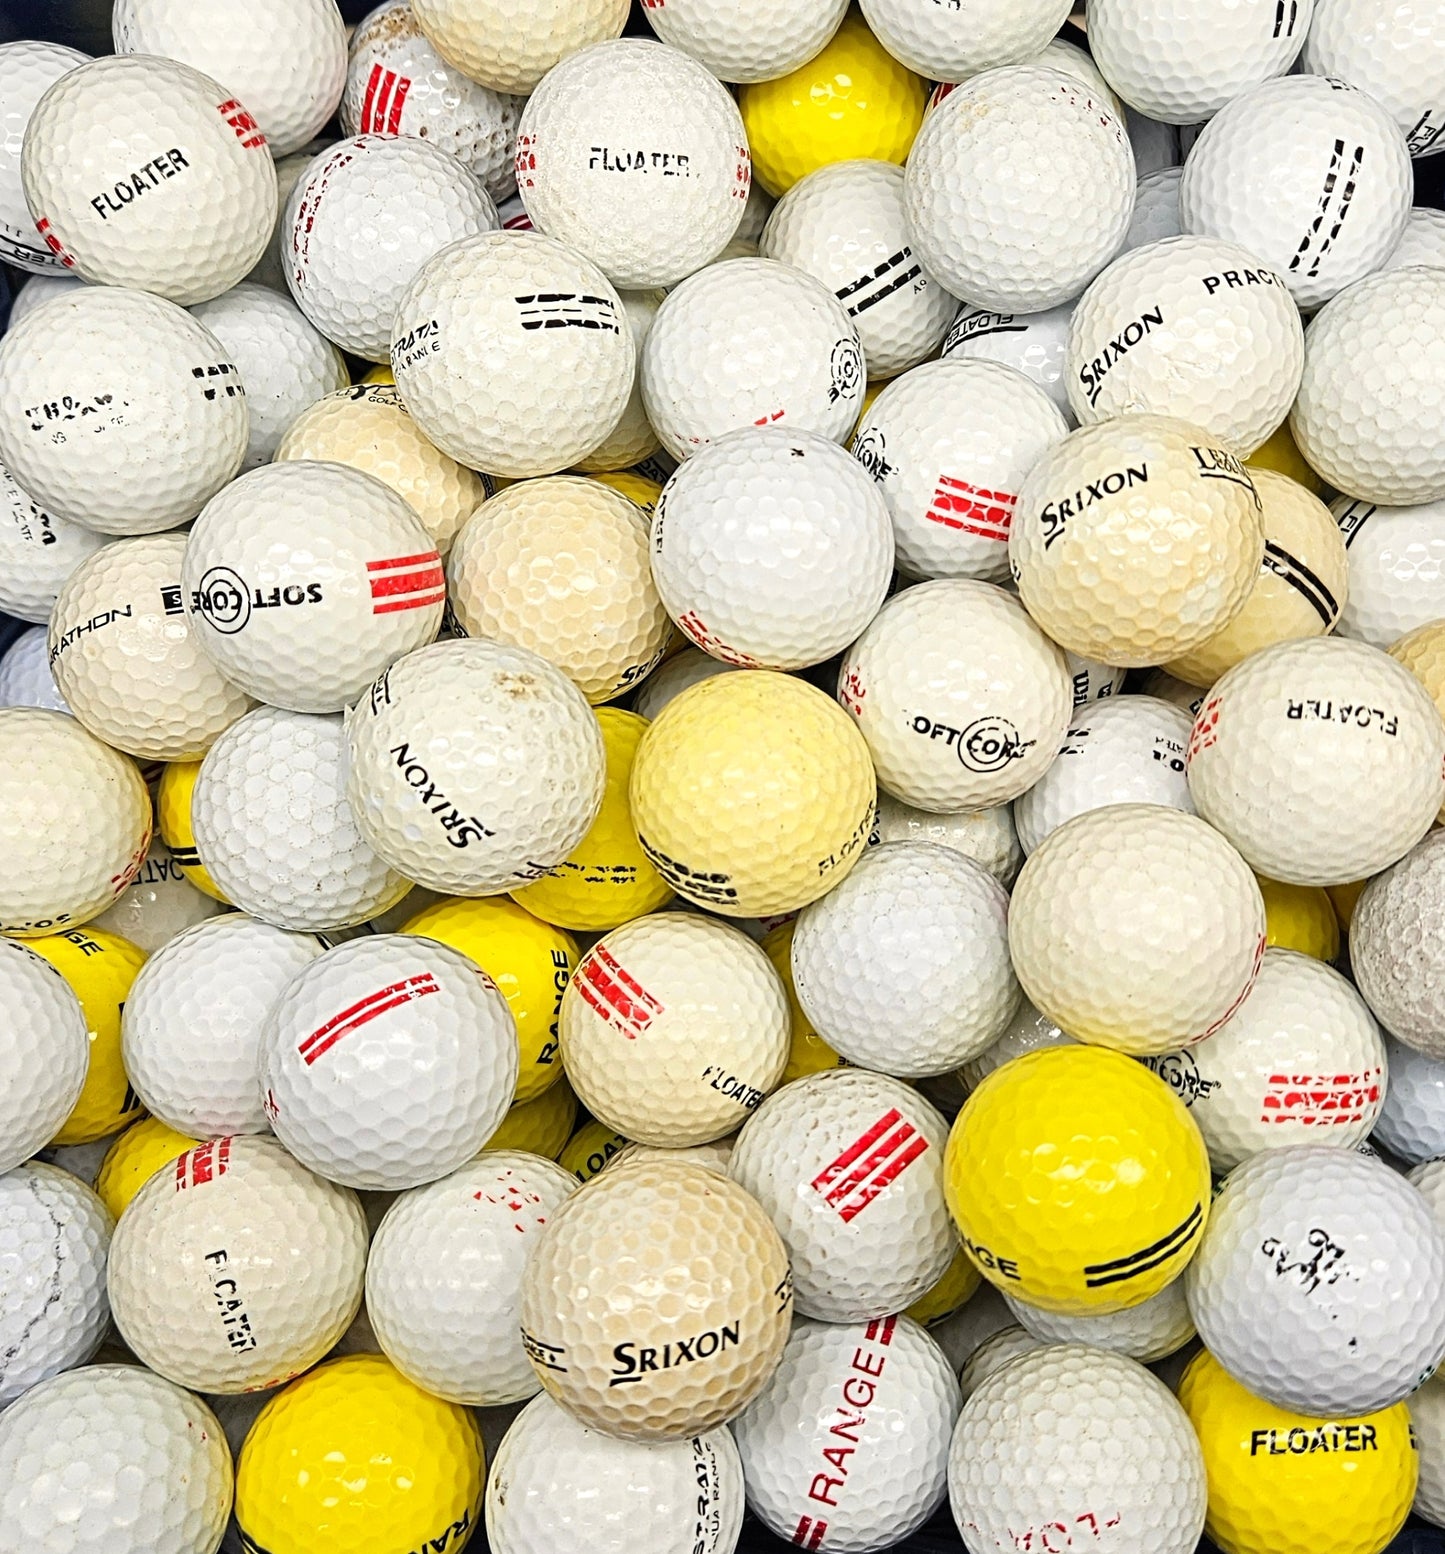 Floating Range Golf Balls